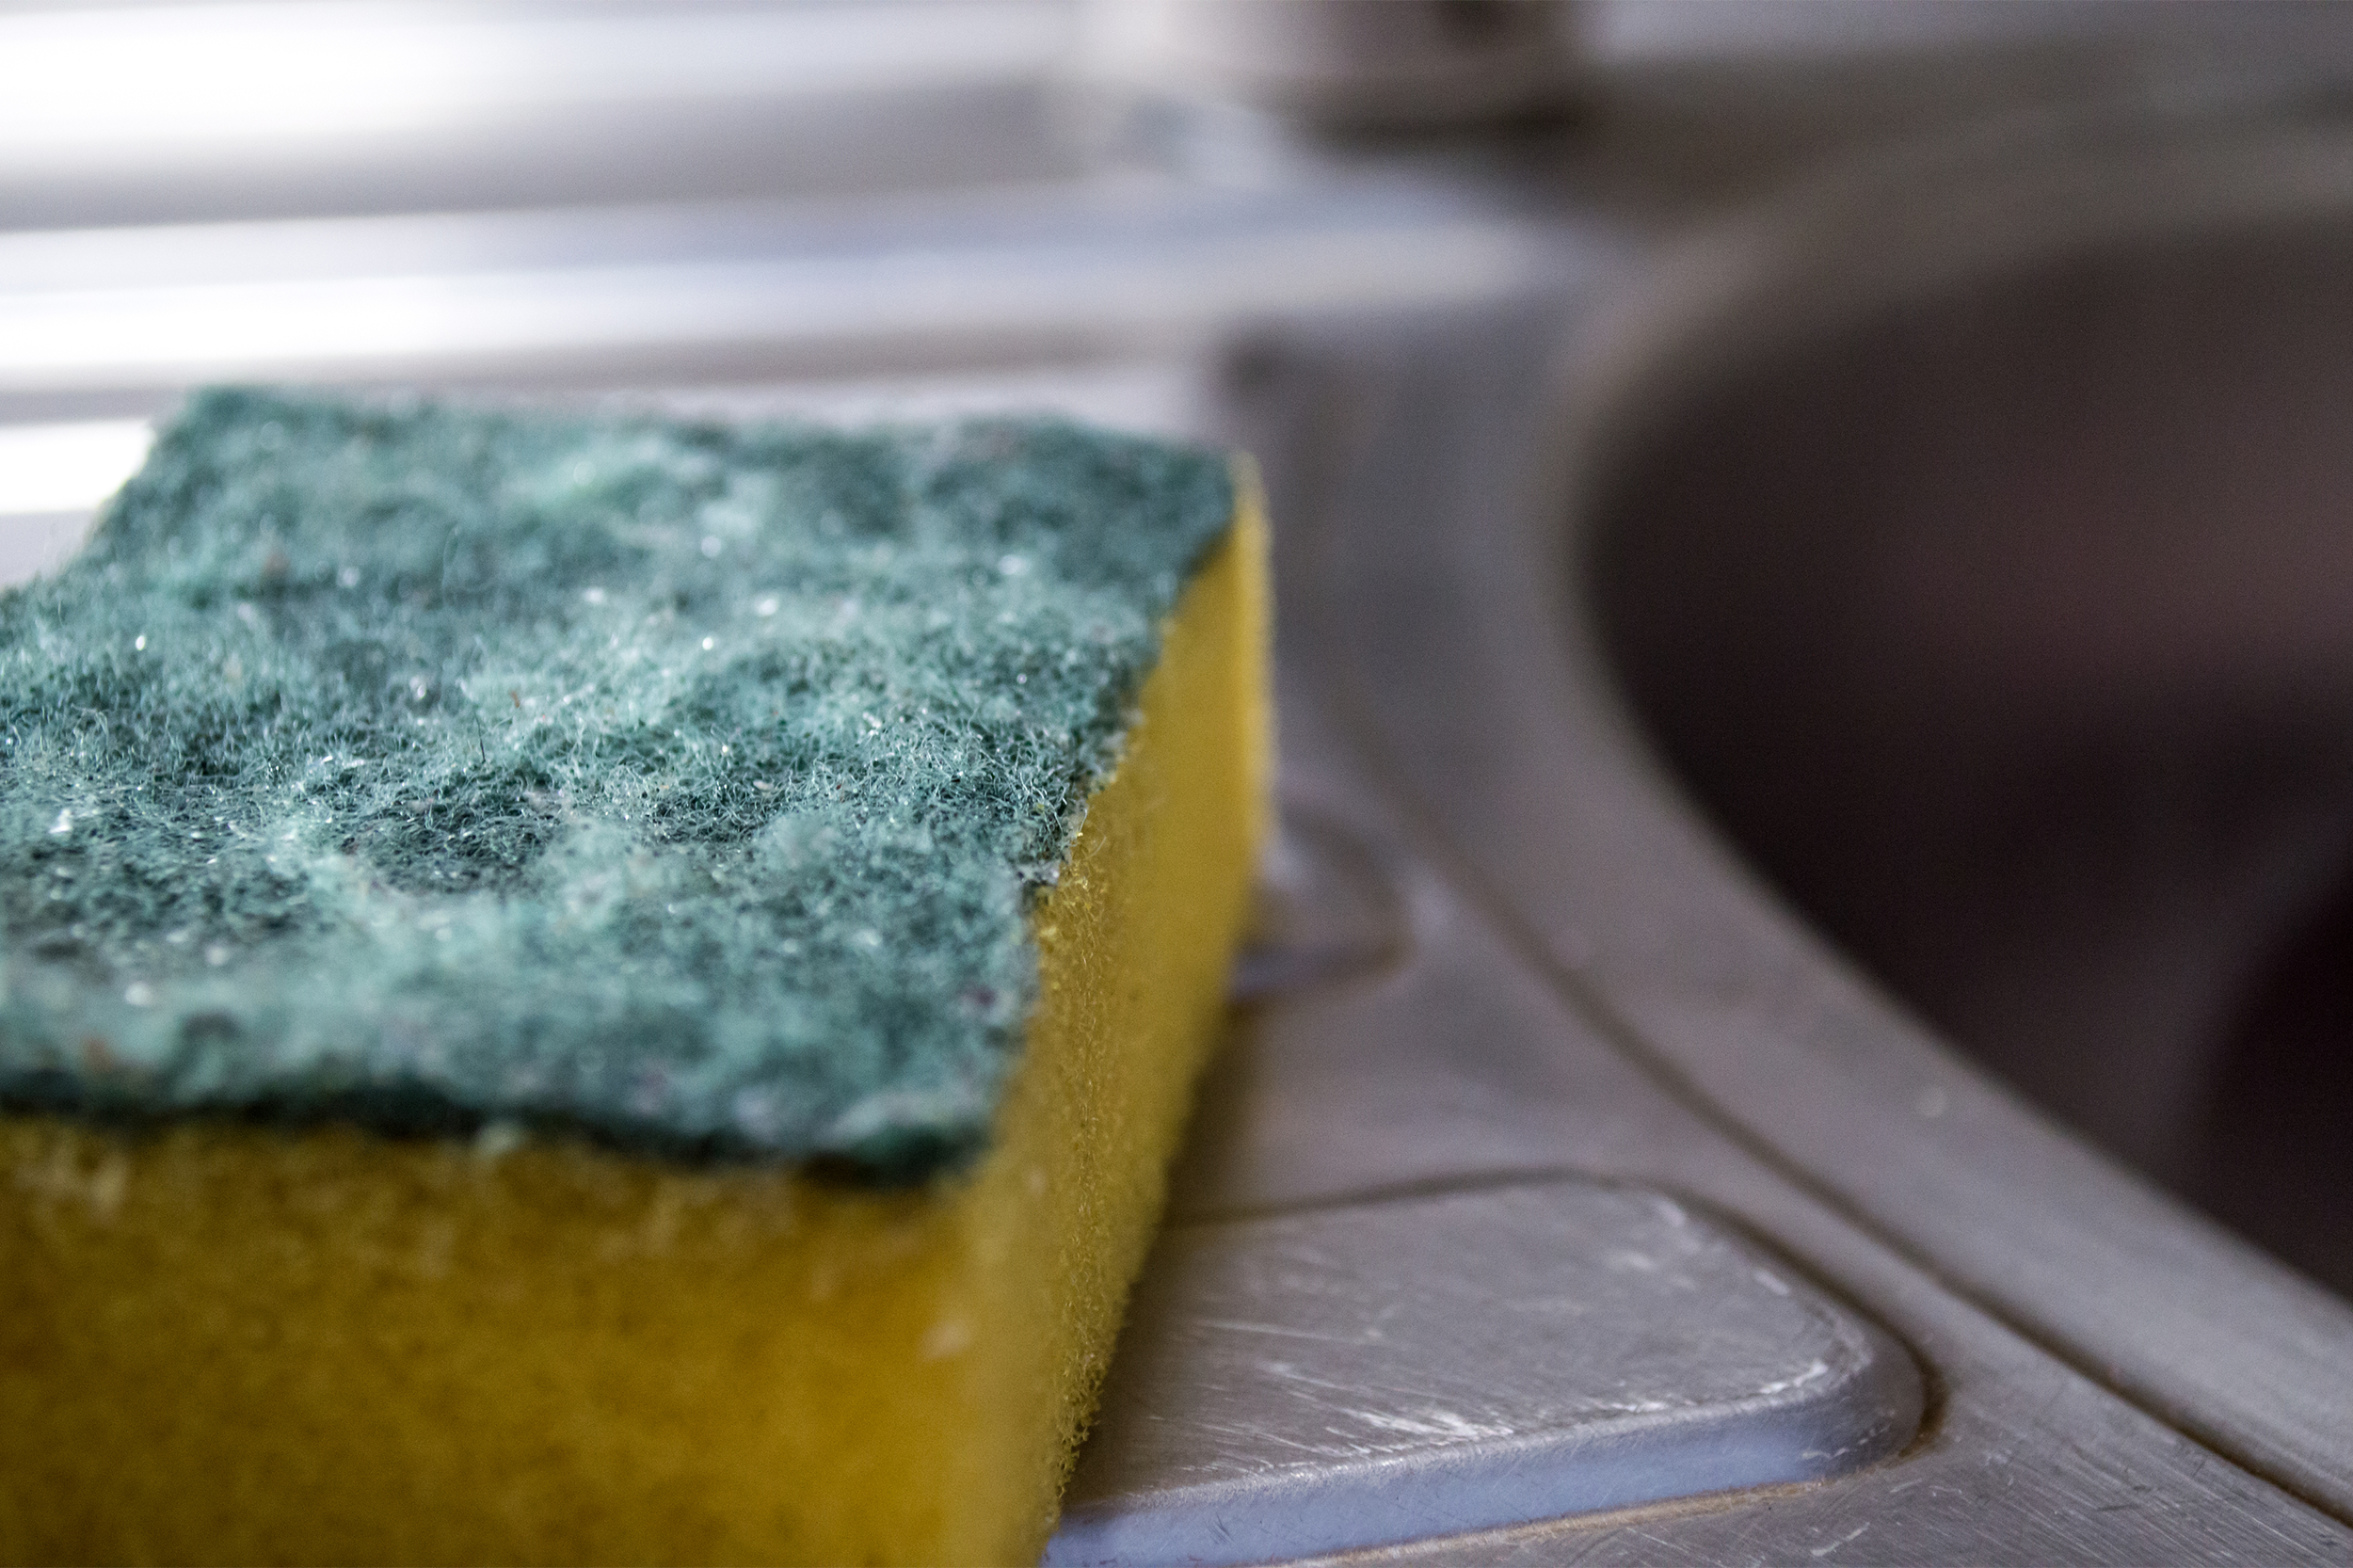 Sponge forge. ГУПКК для посуды грязная. Старая губка для посуды. Пористые губки для мытья посуды. Губка для мойки посуды.